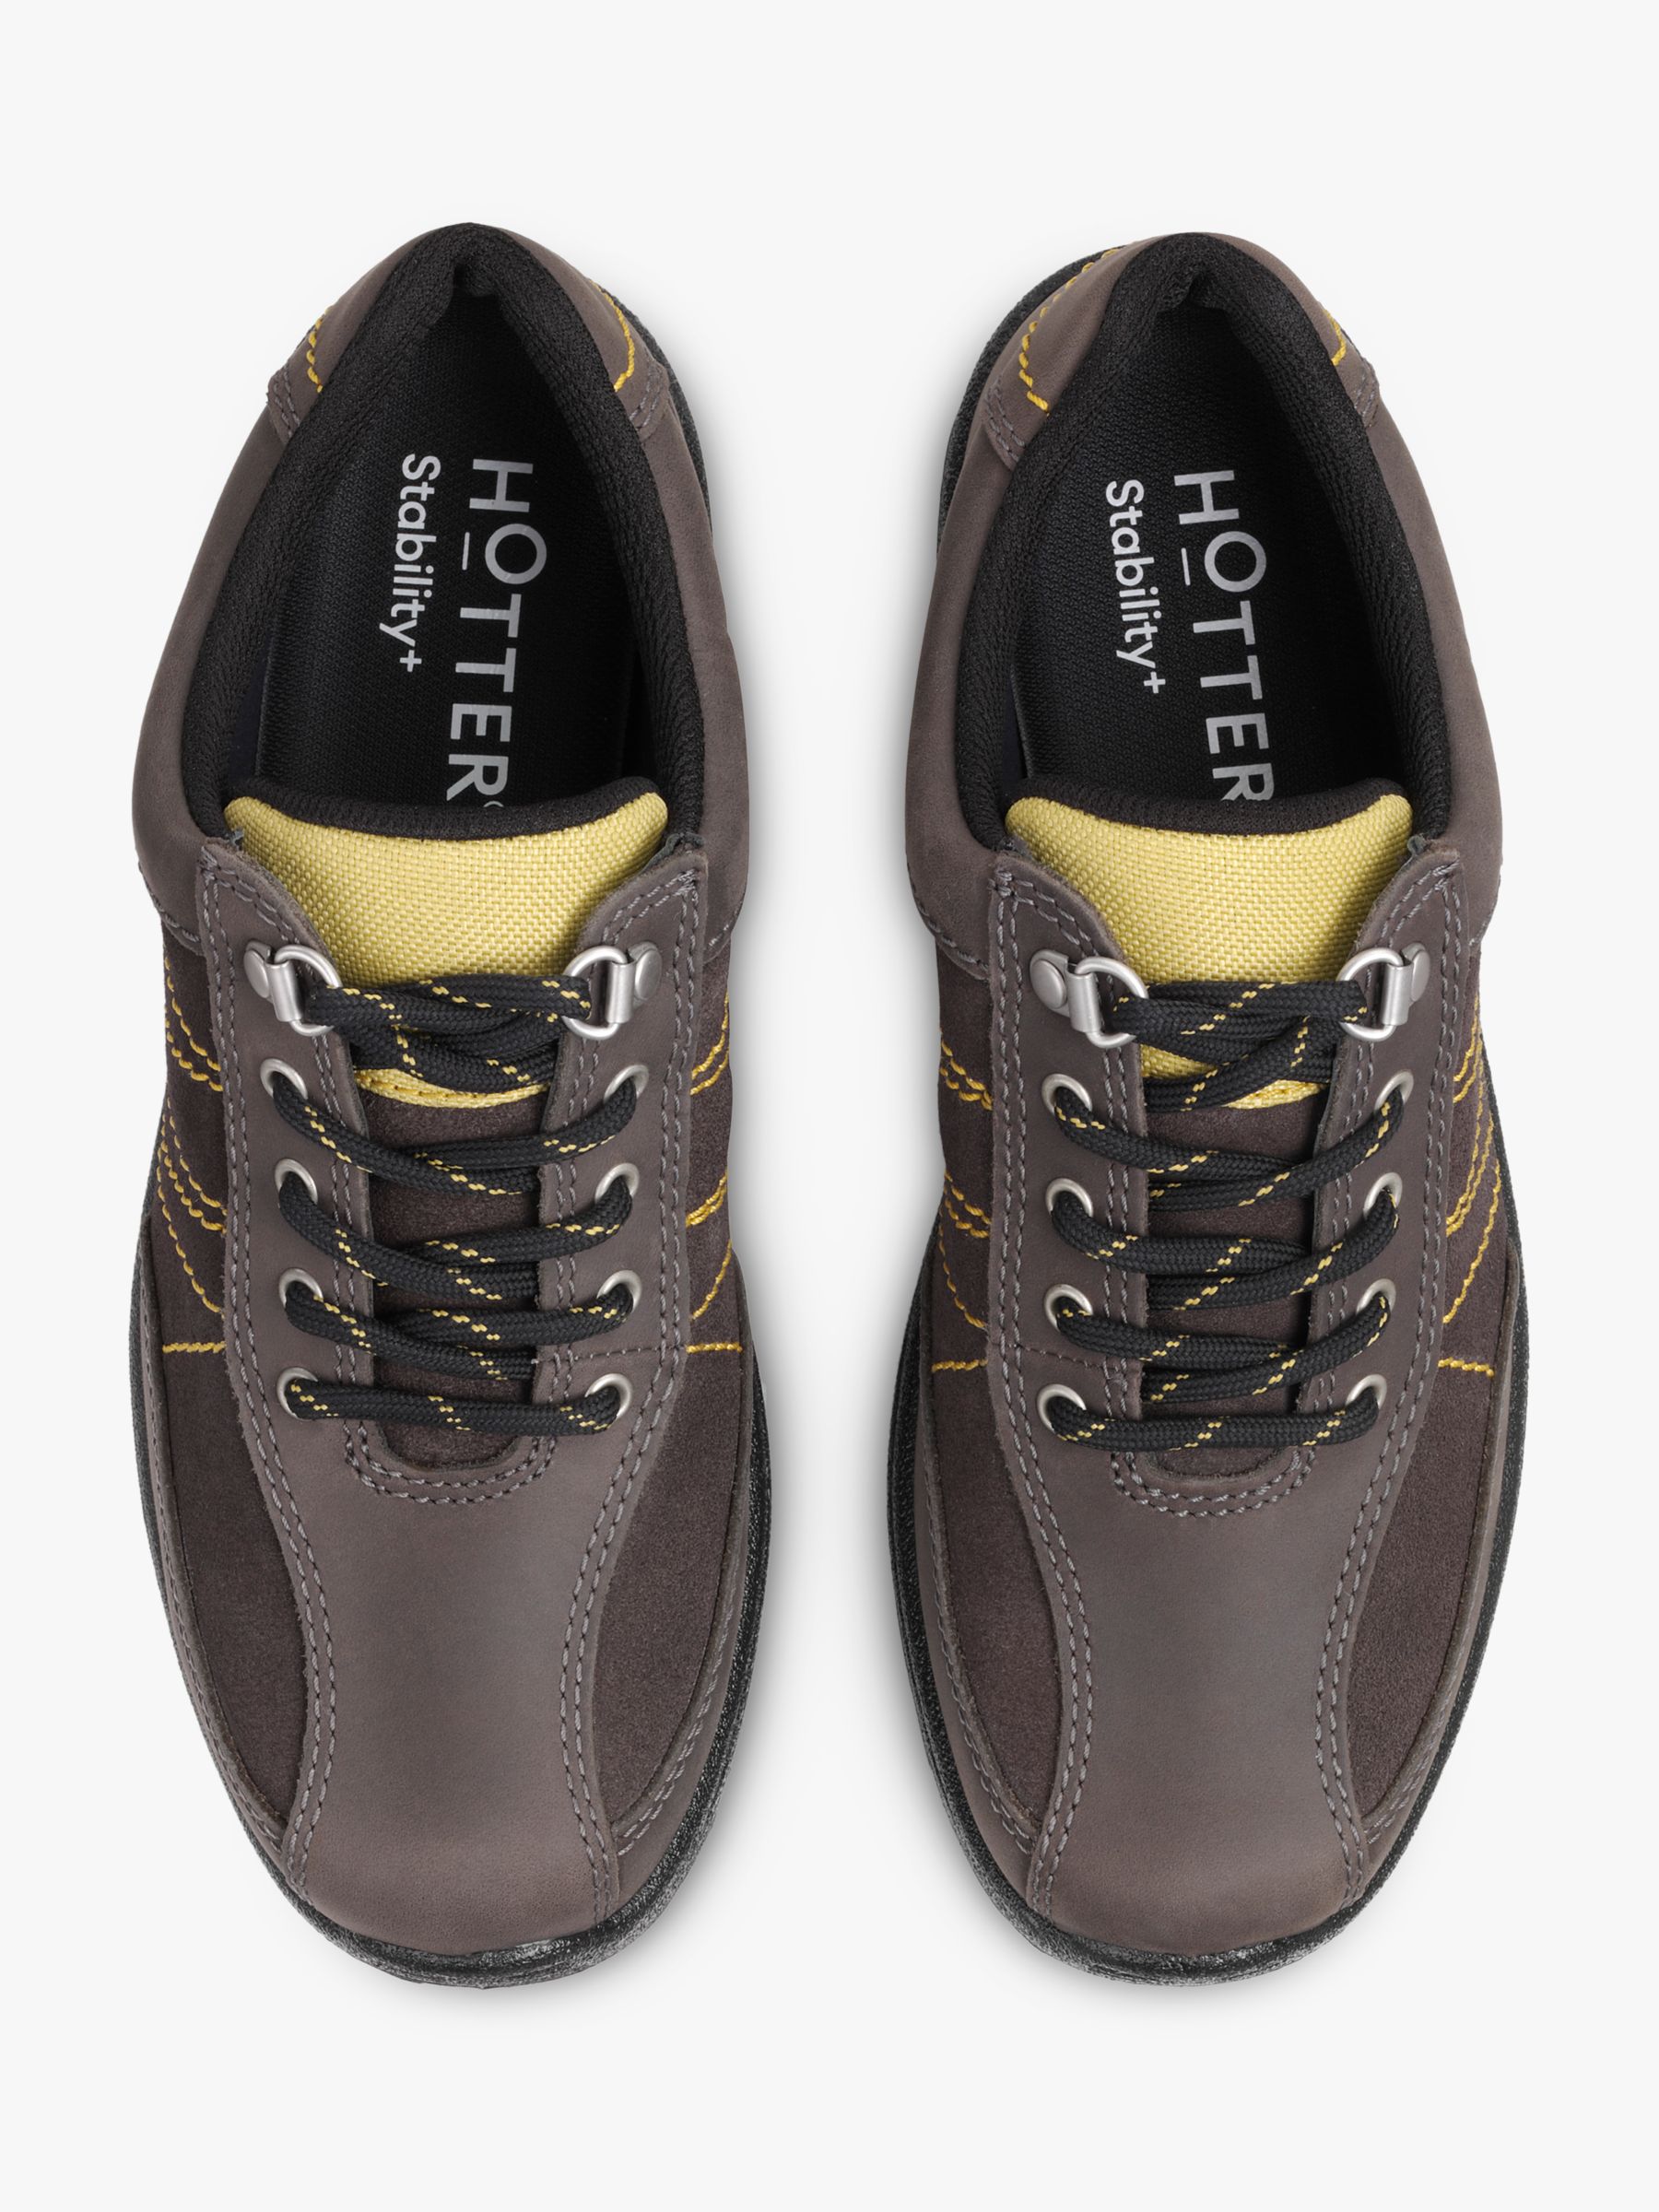 Hotter Mist Wide Fit Gore-Tex Walking Shoes, Charcoal Citrus, 3